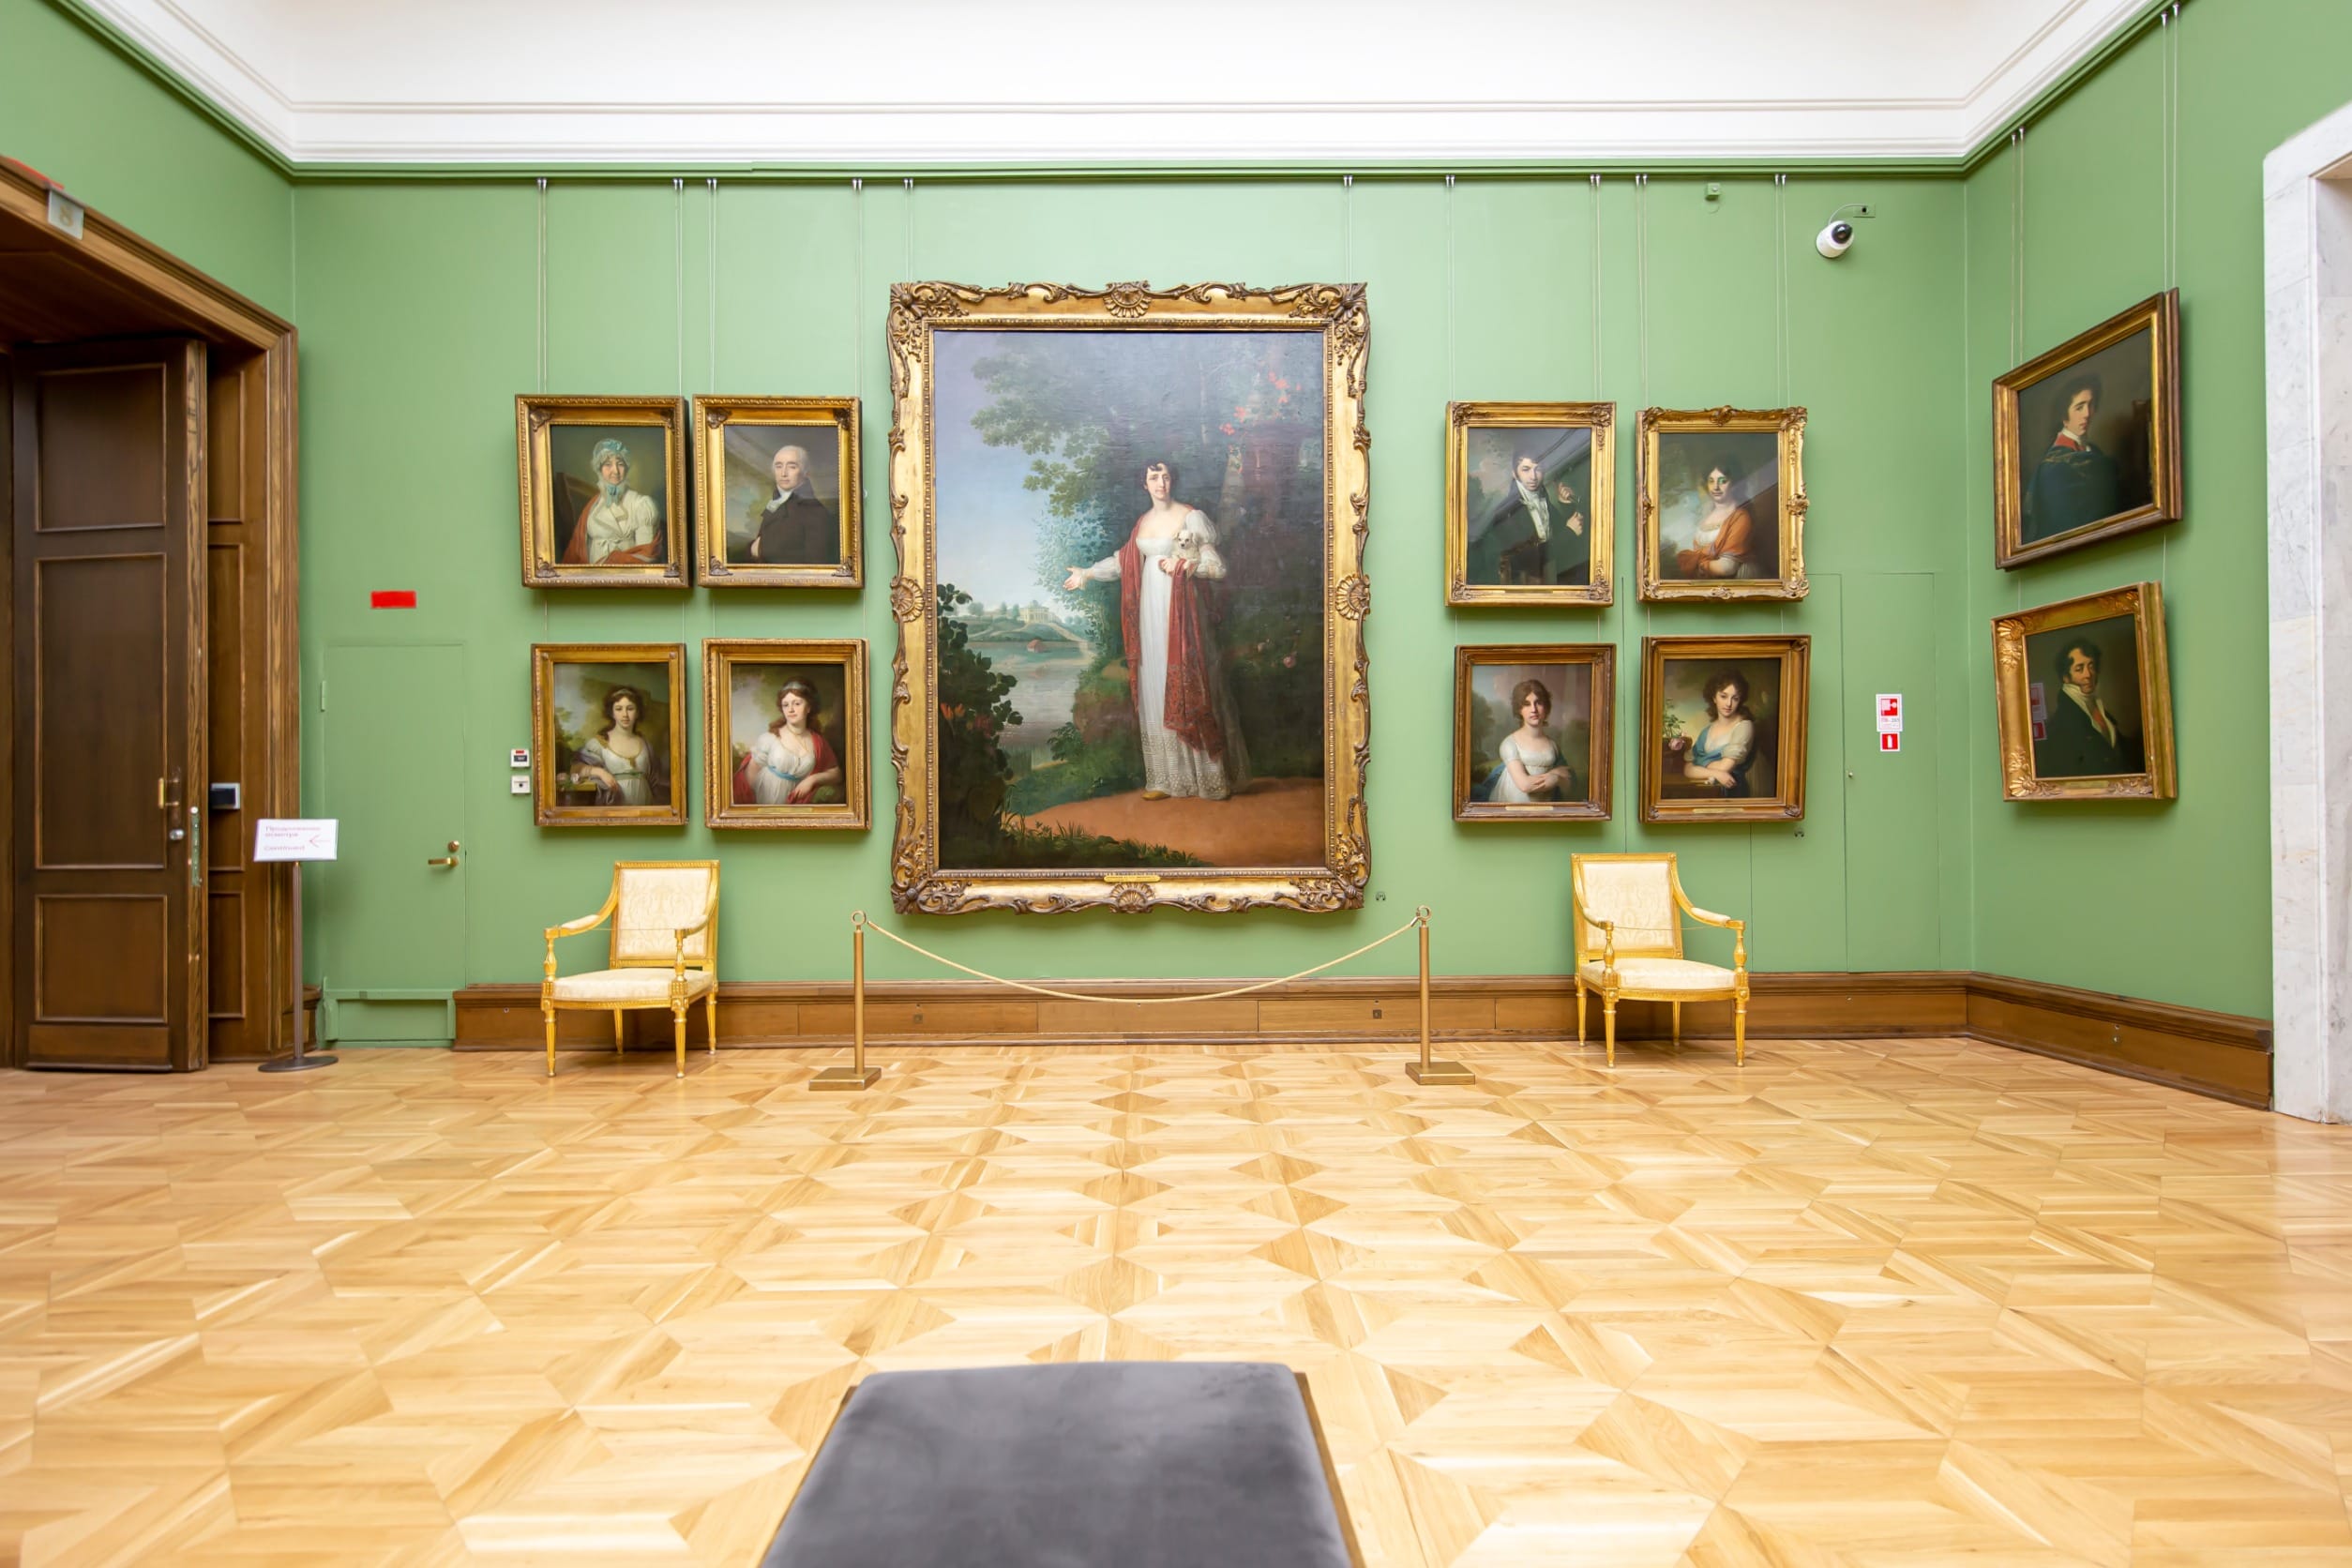 Государственная Третьяковская галерея — художественная галерея в Москве